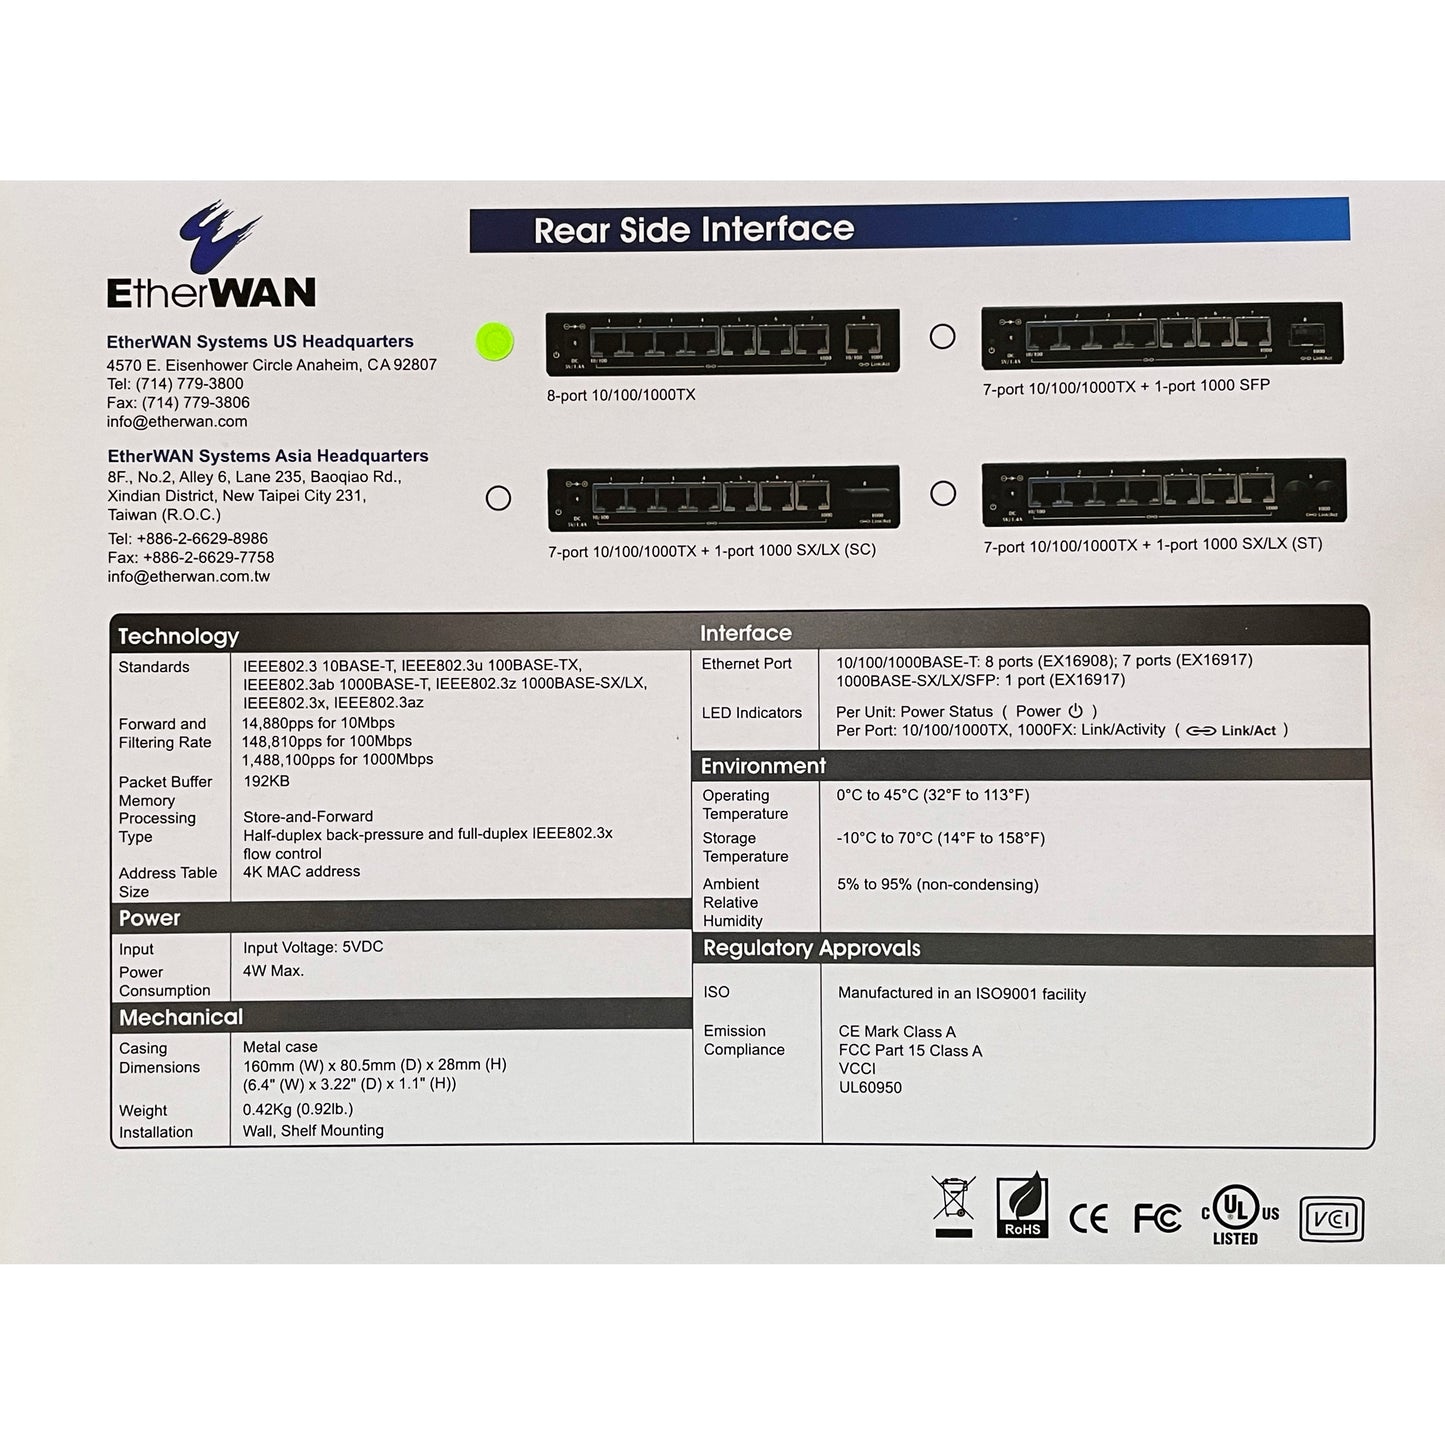 EX16908 - Gigabit Ethernet Switch - Unmanaged 8-port 10/100/1000BASE-T